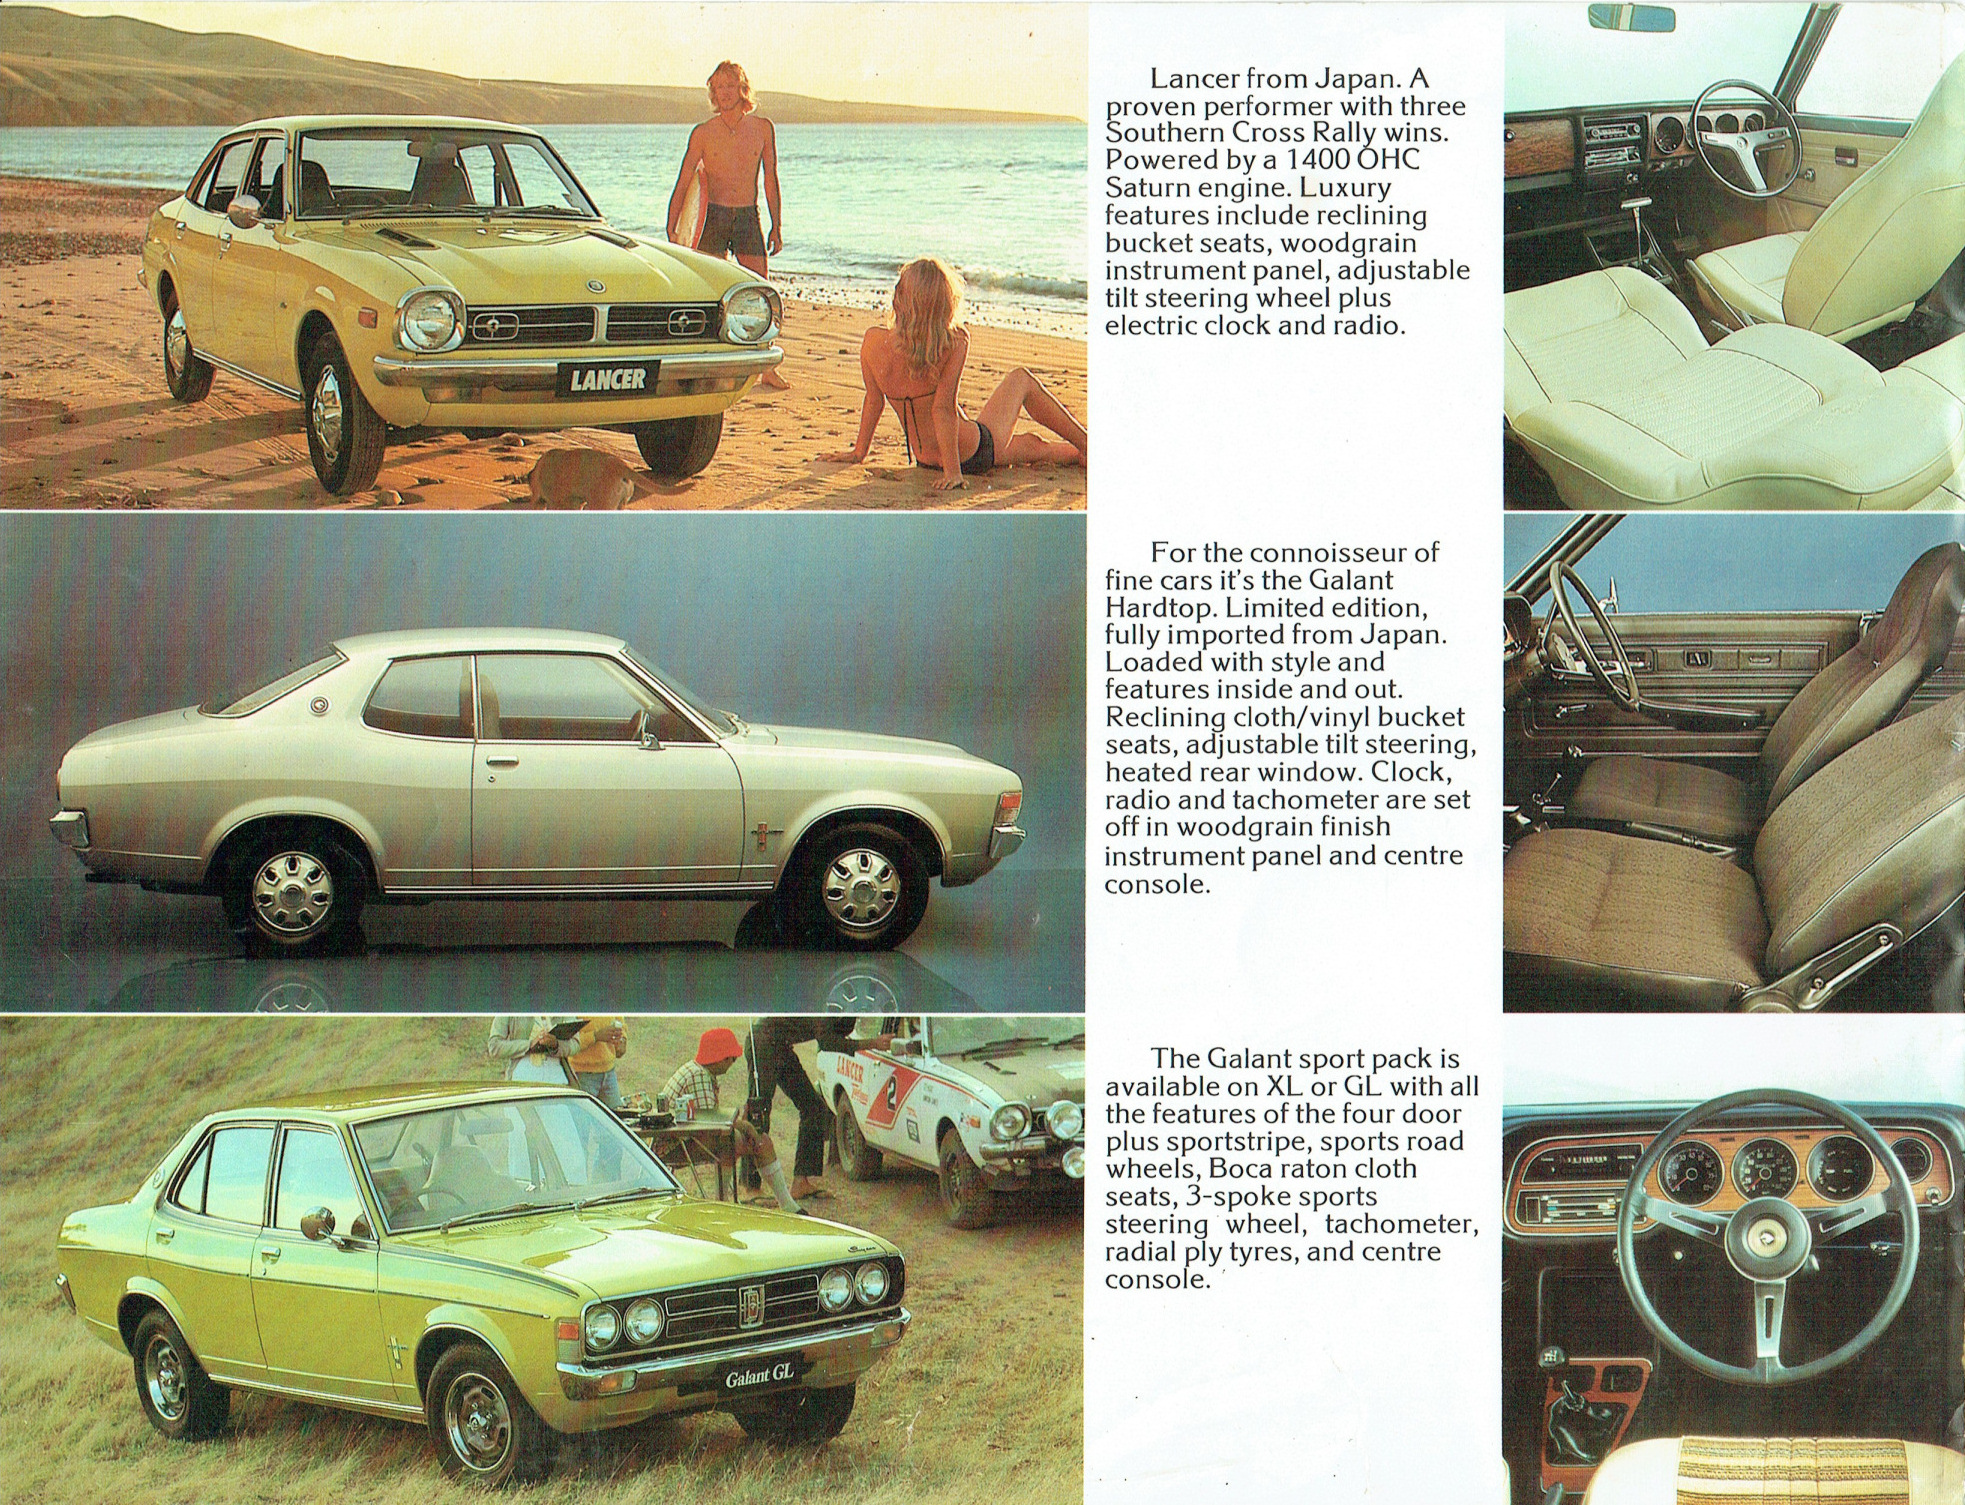 1975_Chrysler_Cars_Aus-04